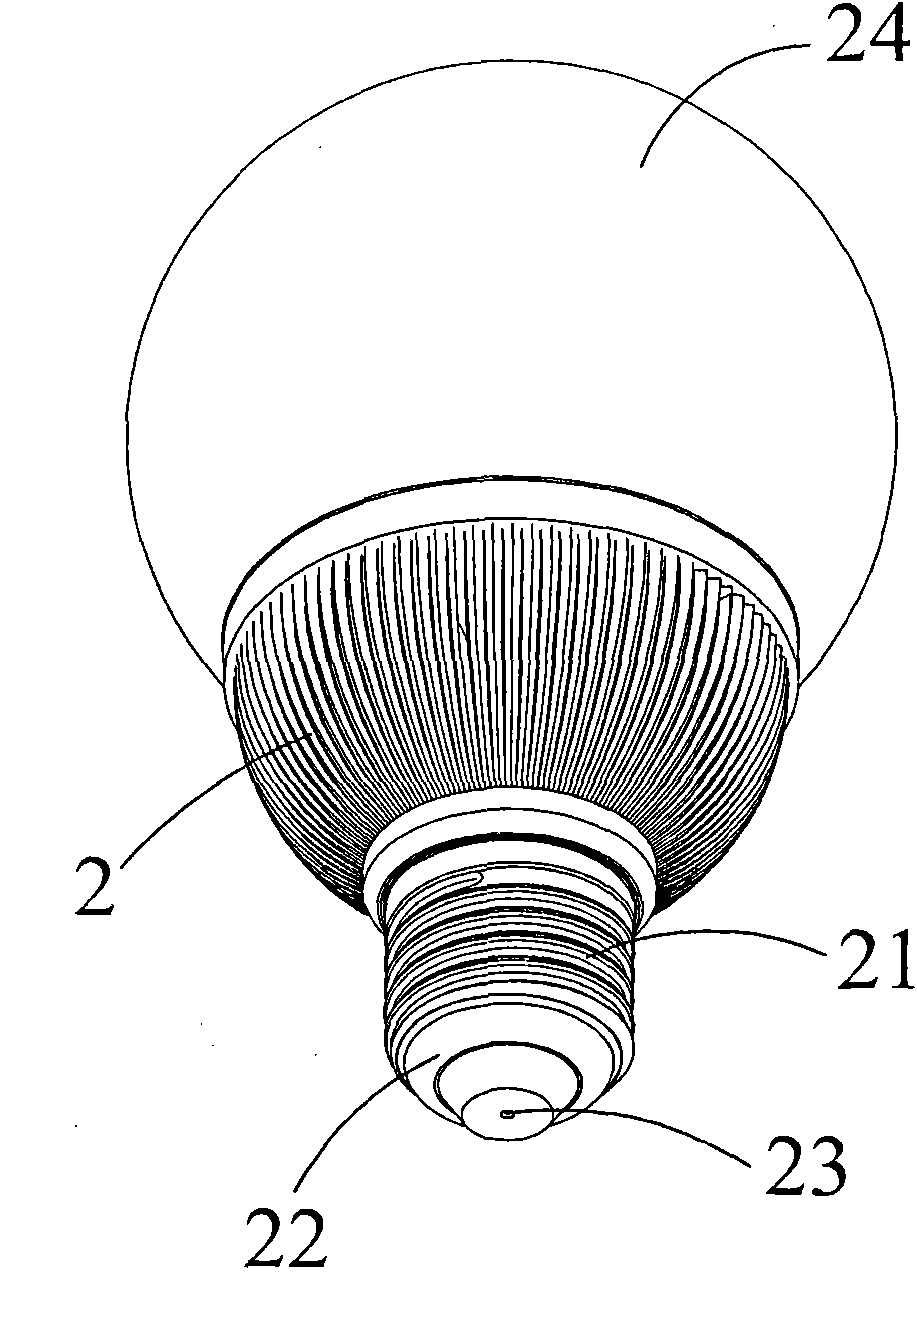 High-efficient LED (light emitting diode) lamp